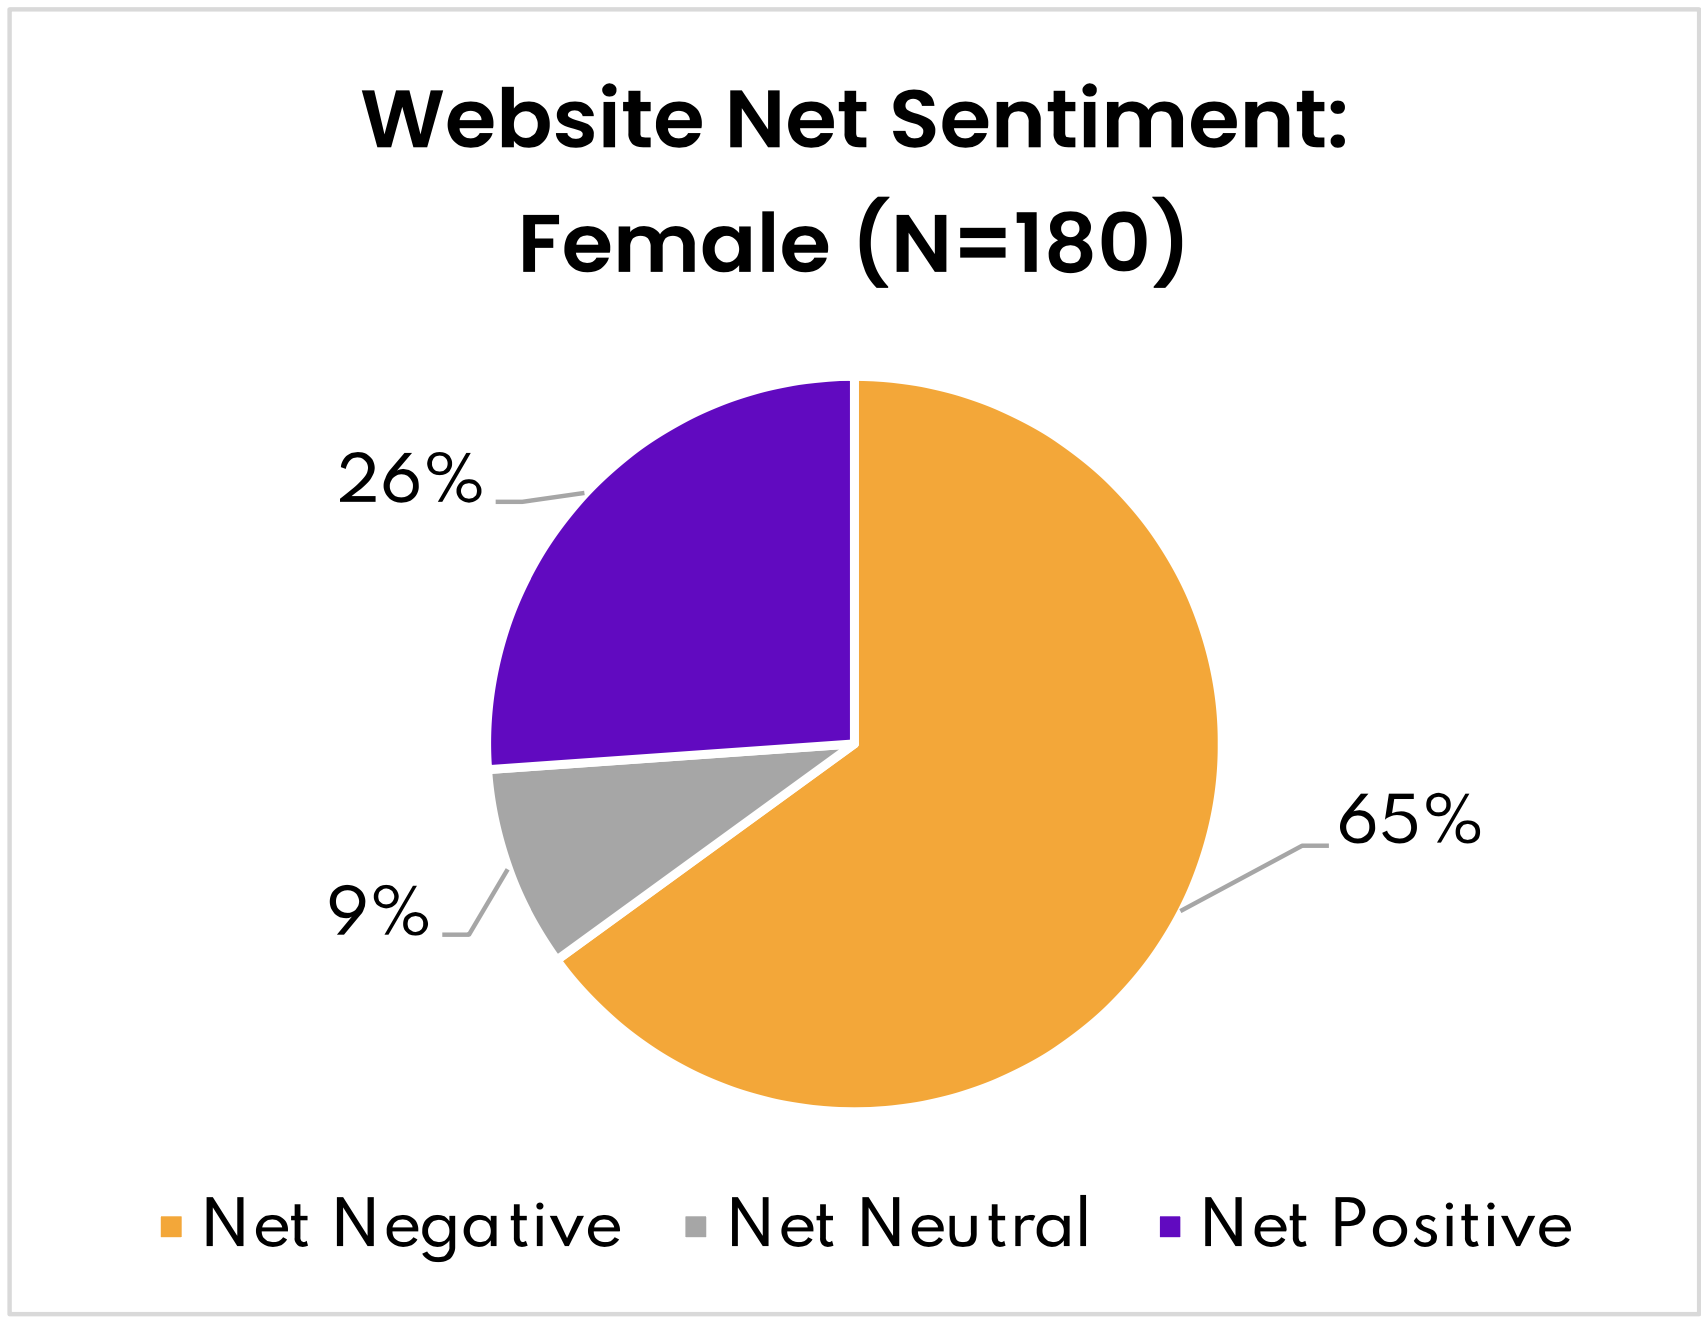 Figure 5- Website Net Sentiment - Female